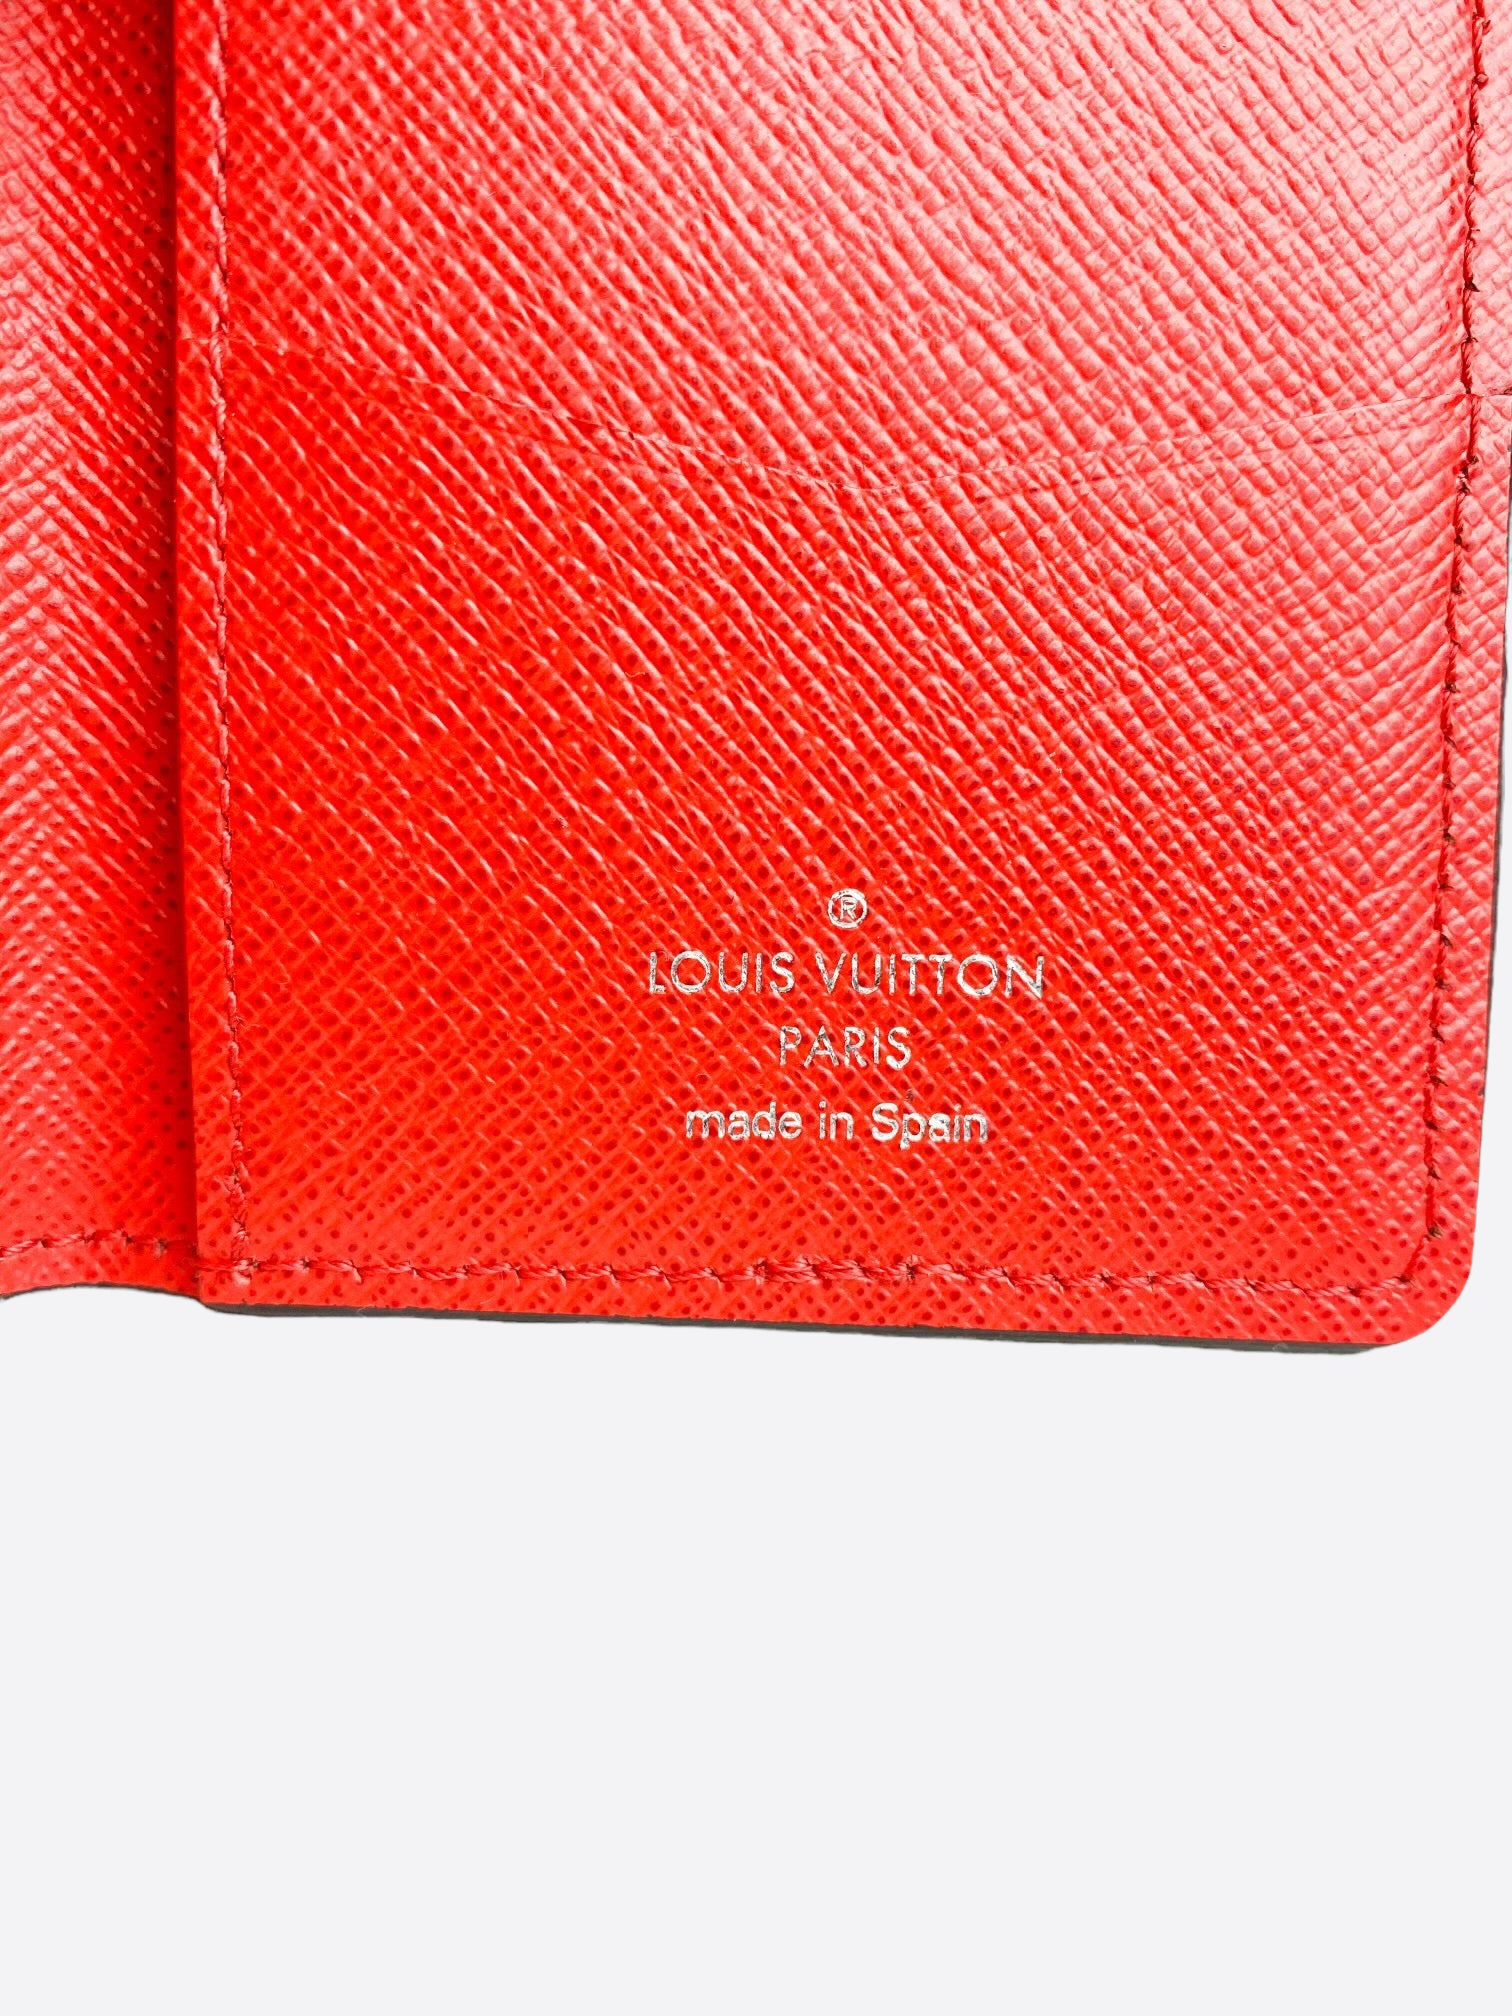 Supreme x Louis Vuitton Red EPI Pocket Organizer